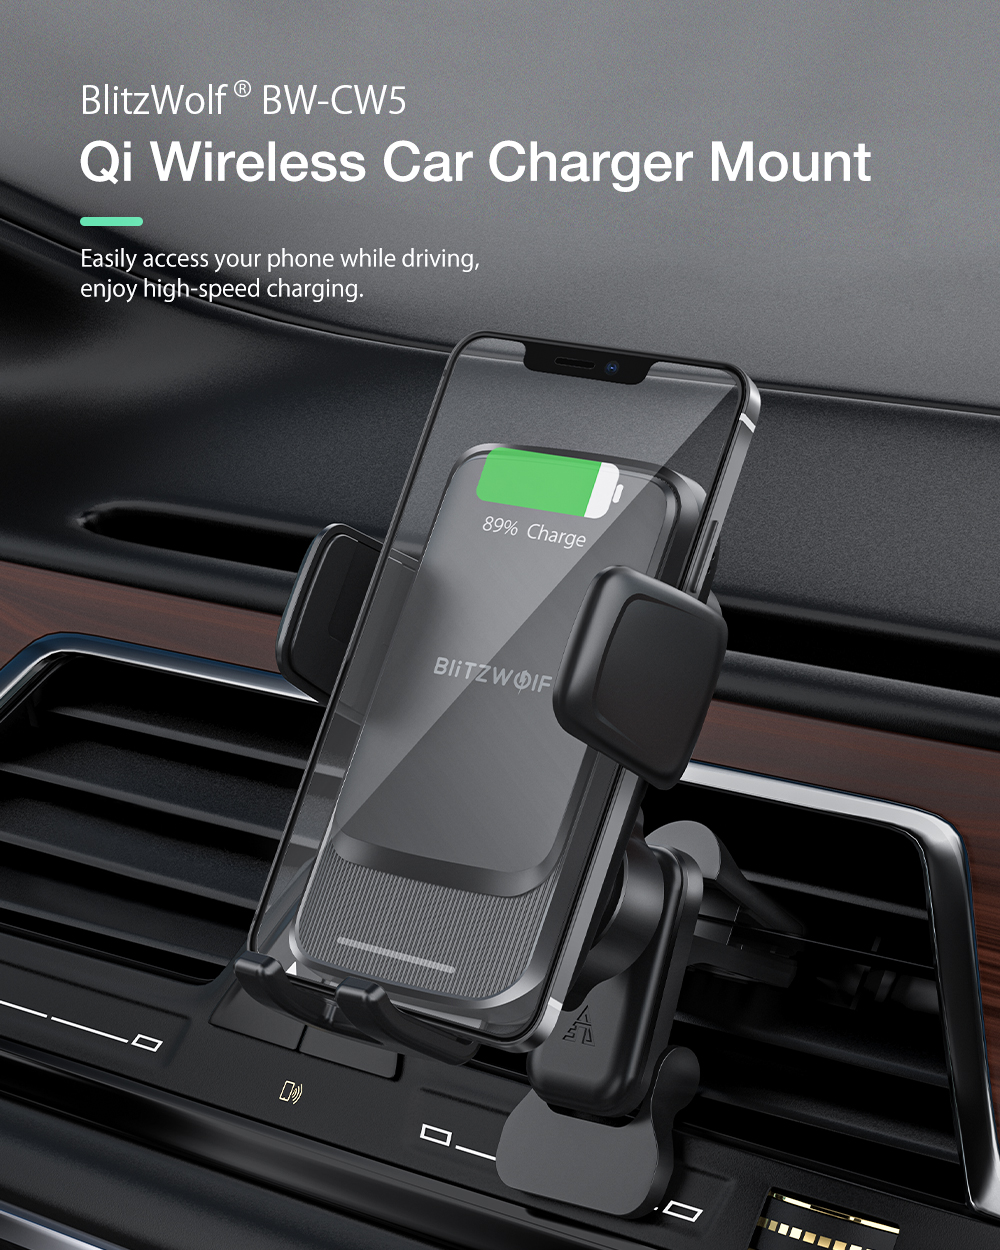 Blitzwolf BW-CW5 car wireless charger